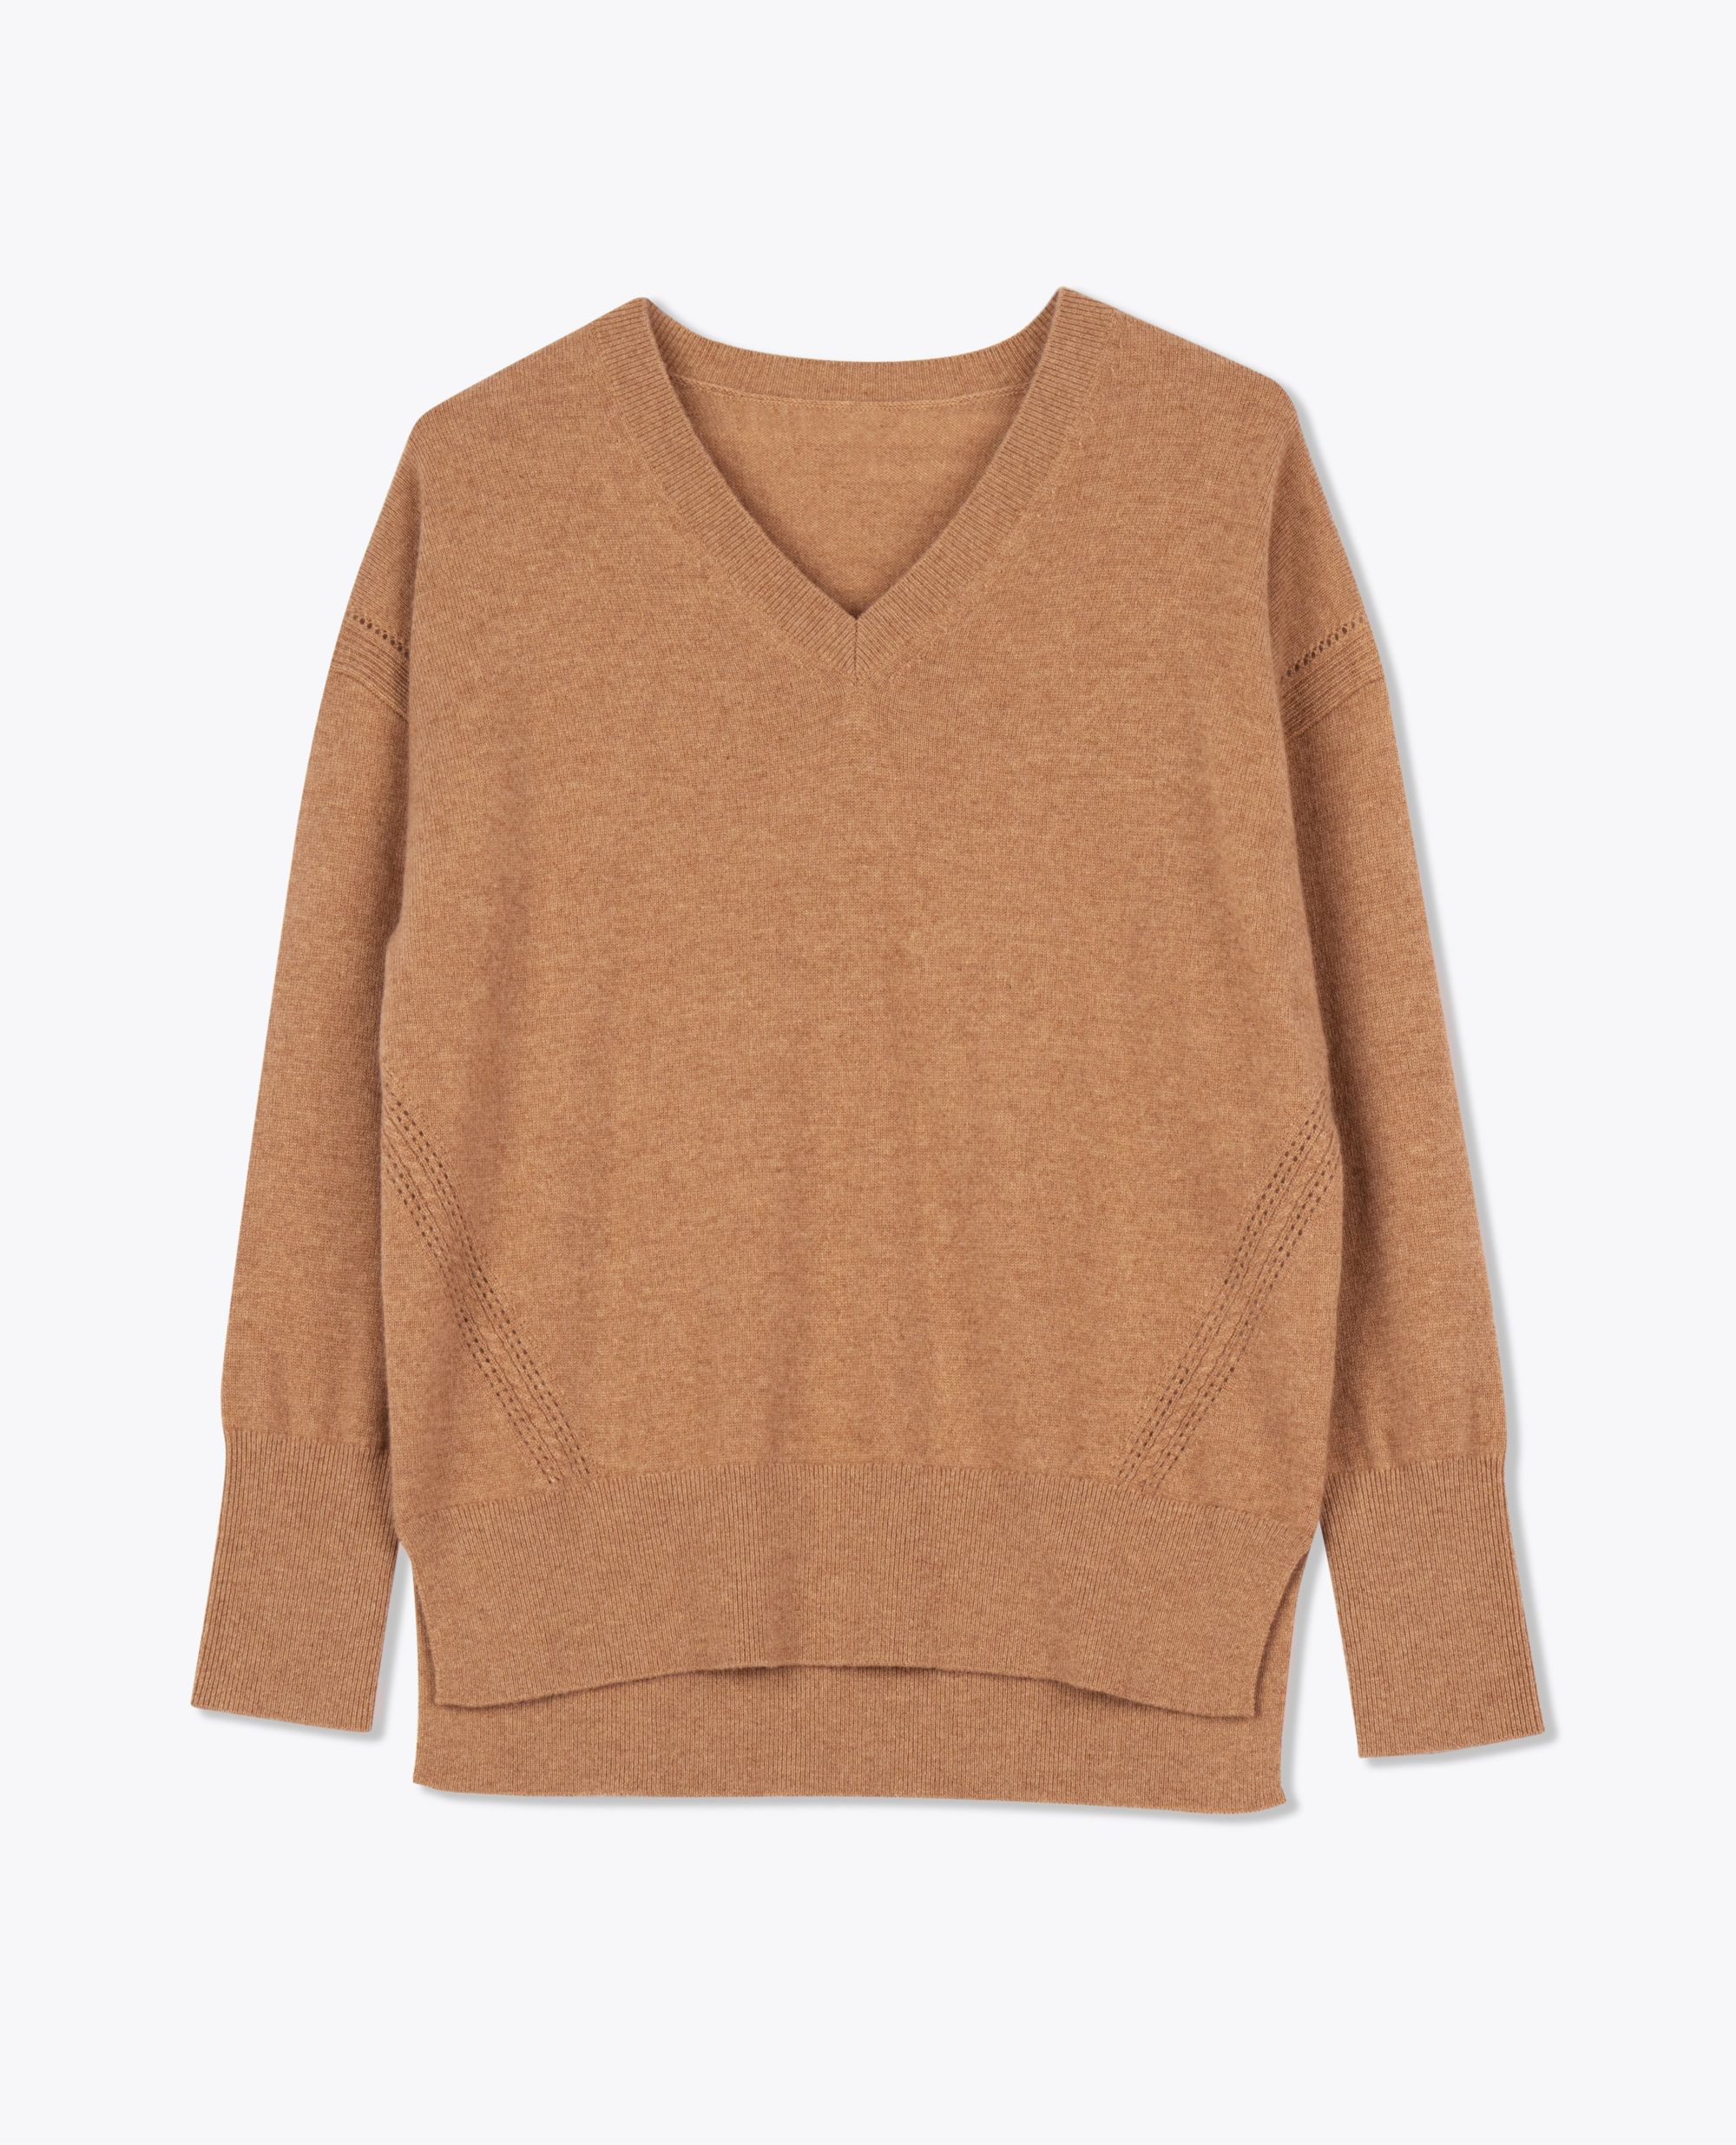 LEEZ Women Cashmere V-Neck Sweater - Camel